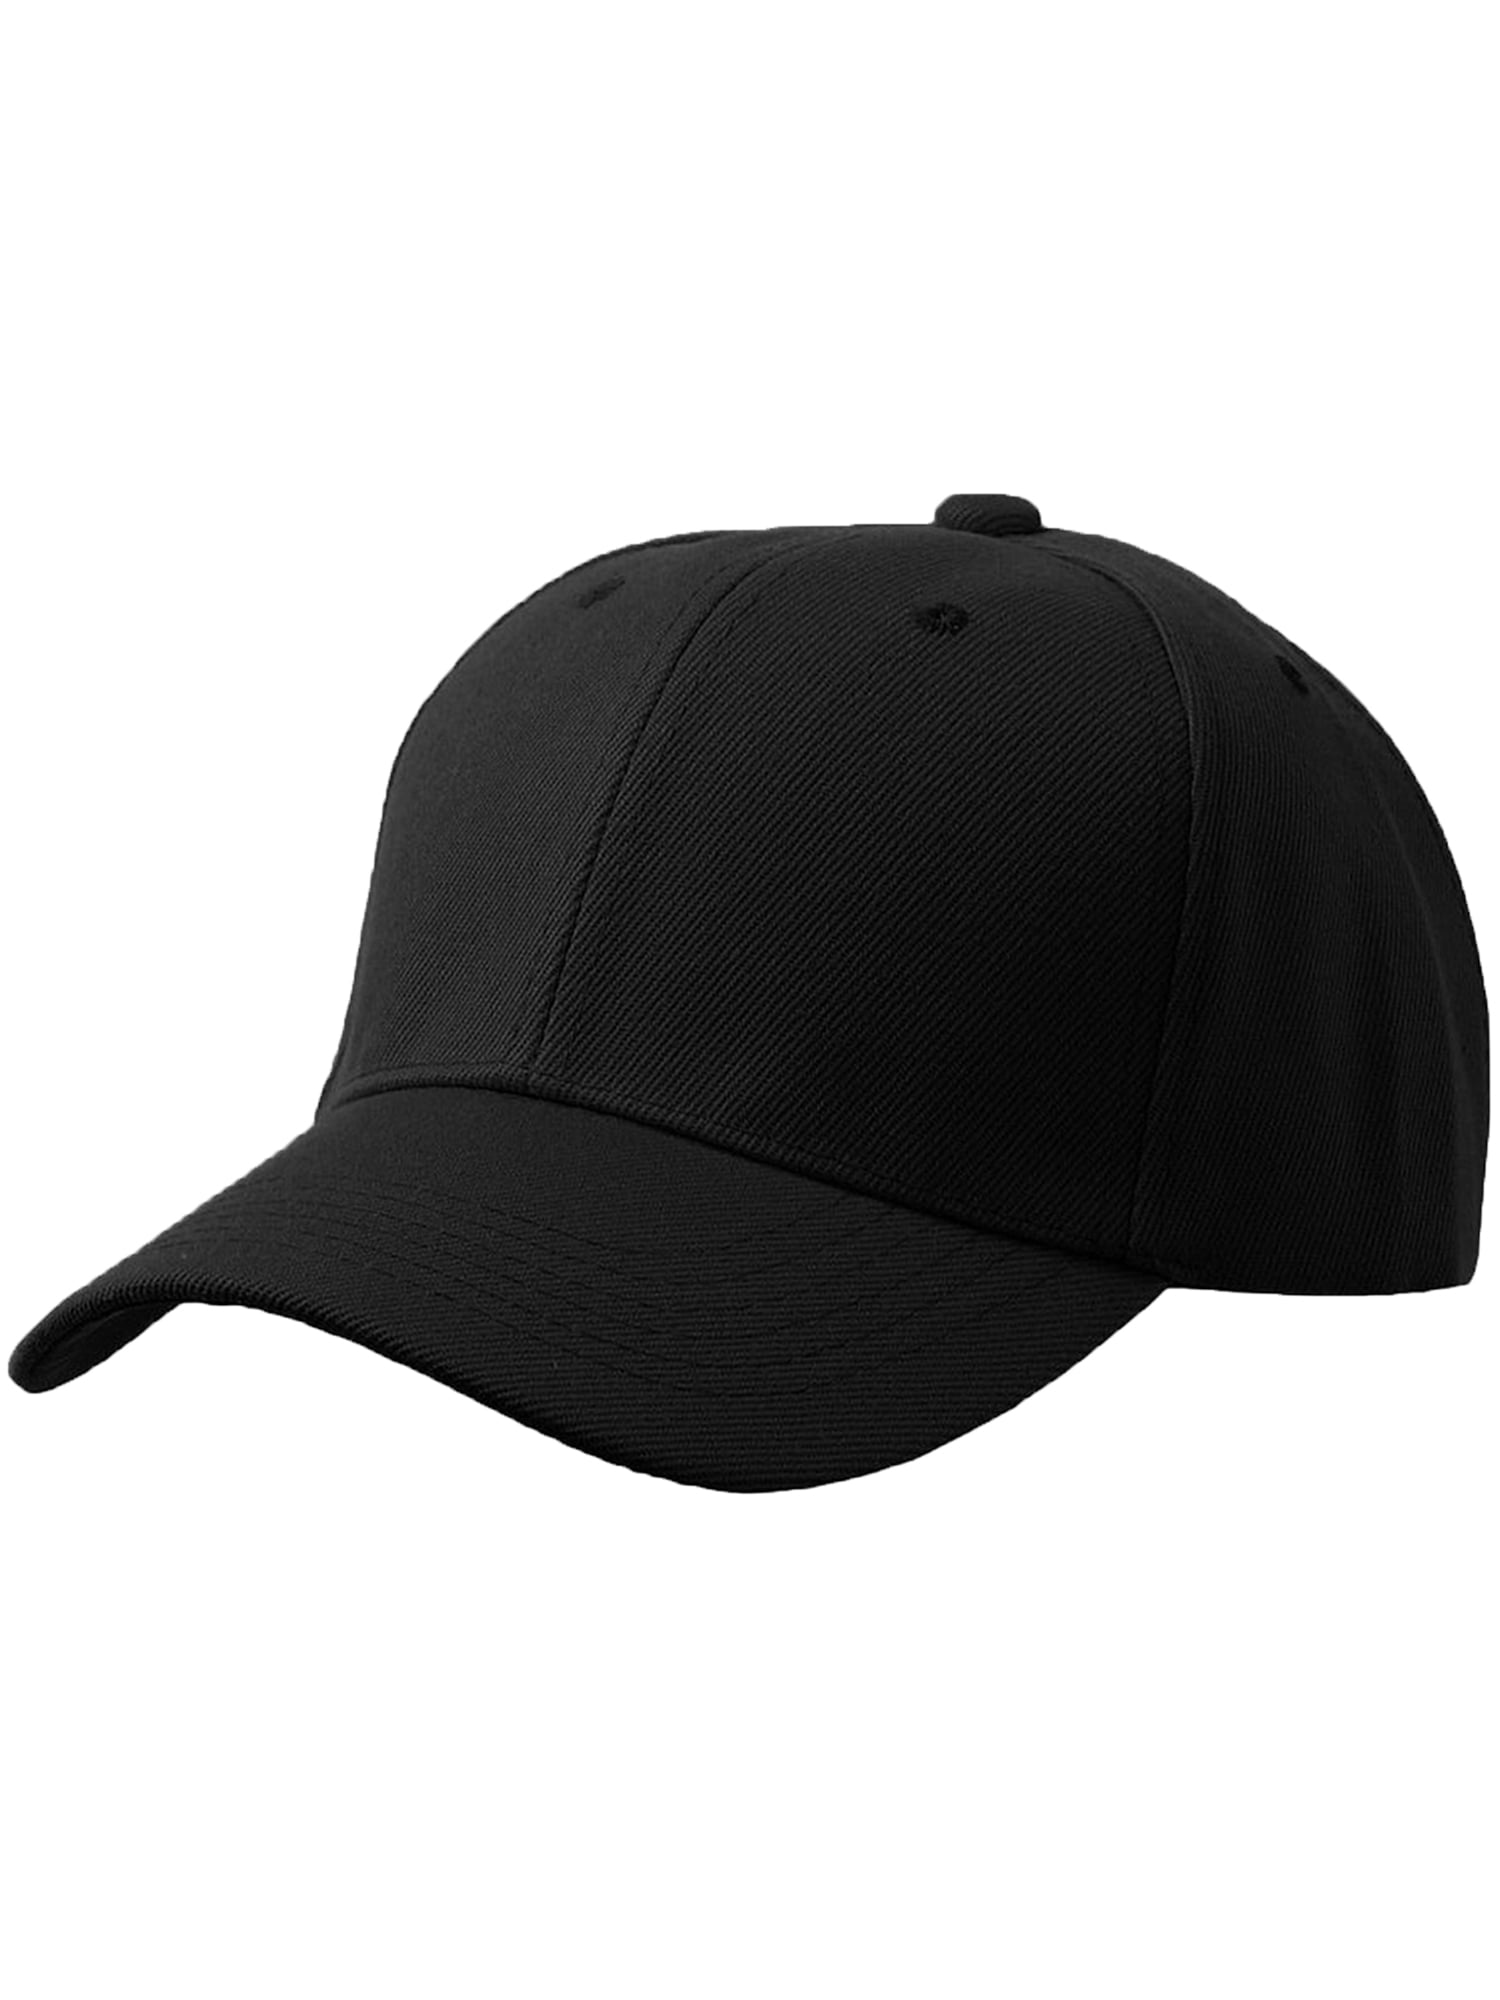 CAP - Men's Plain Baseball Cap Adjustable Curved Visor Hat - Black ...